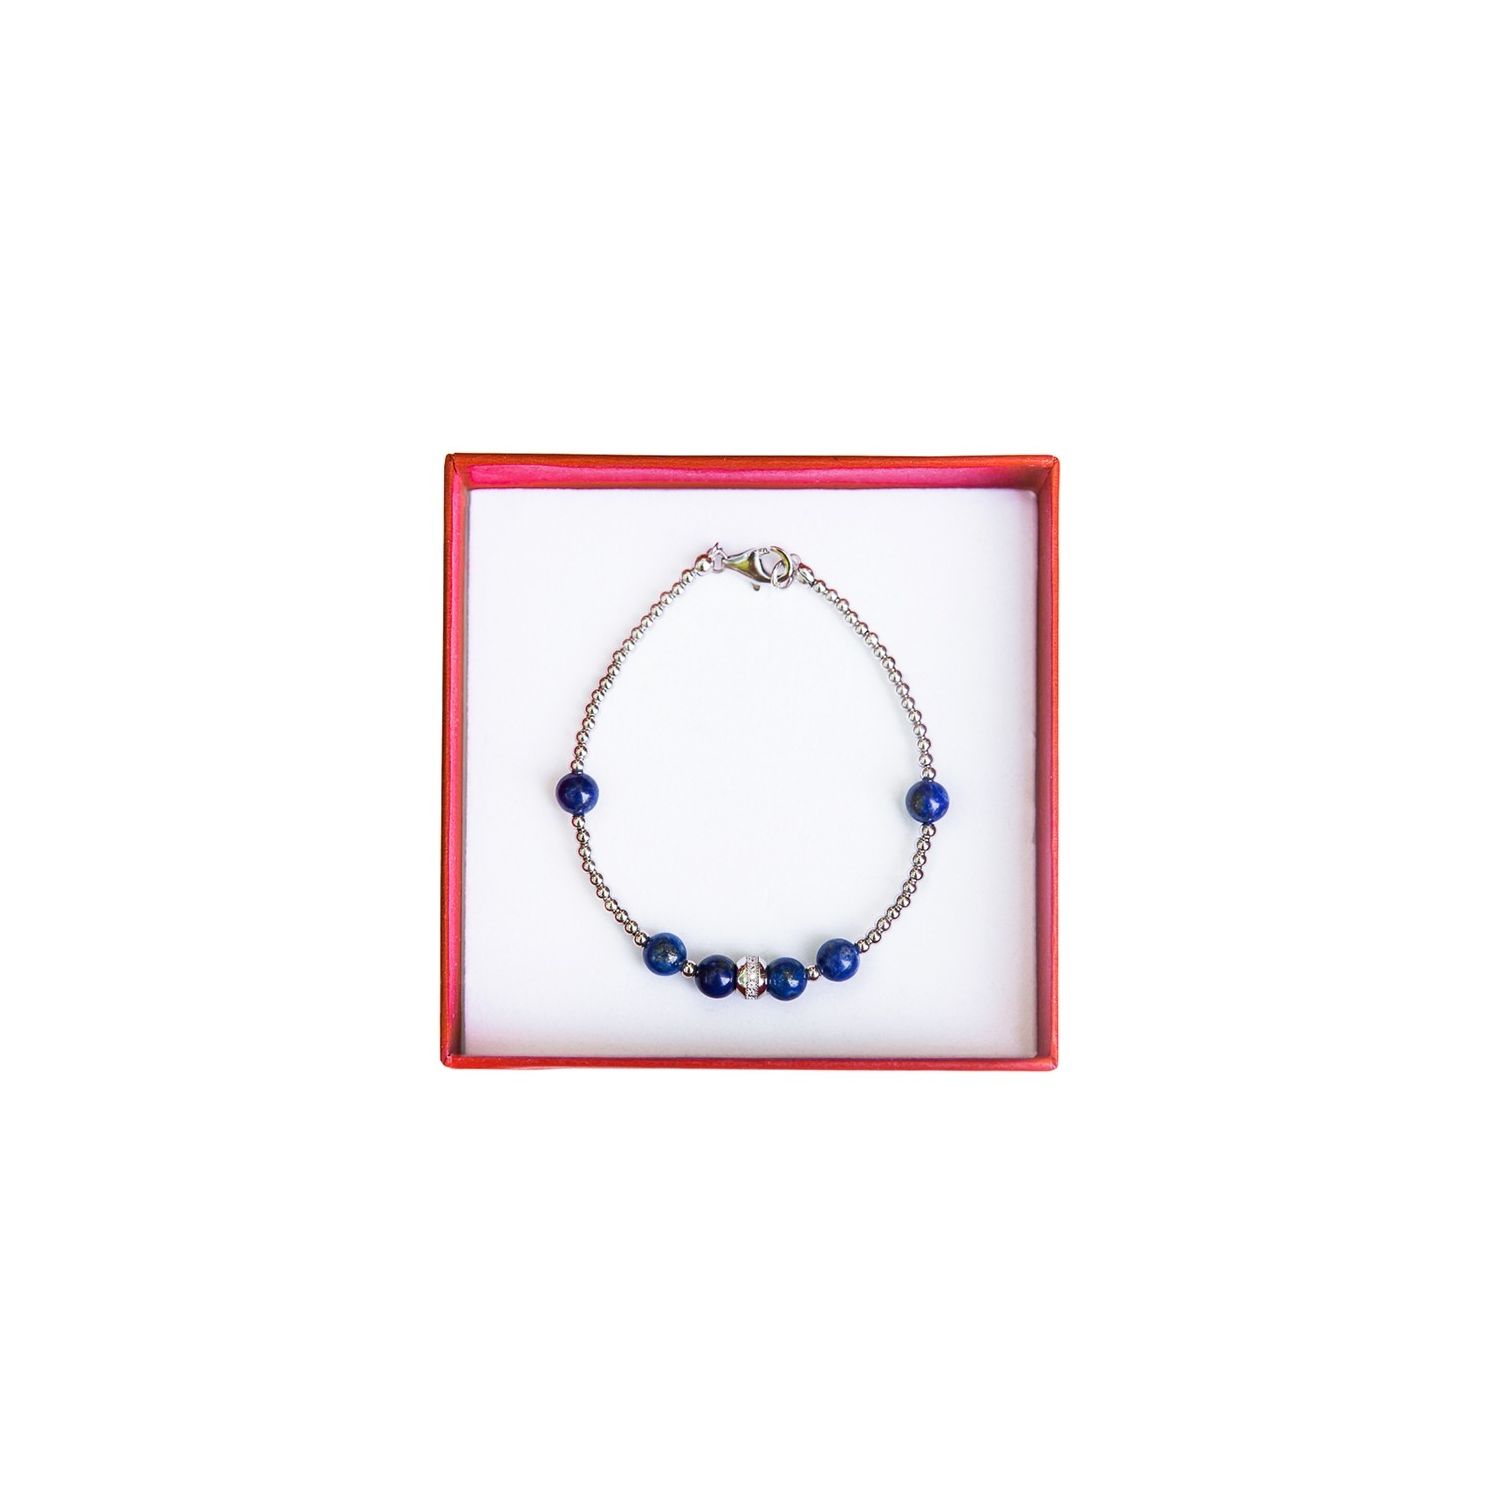 Bracelet silver and lapis lazuli Irresistible